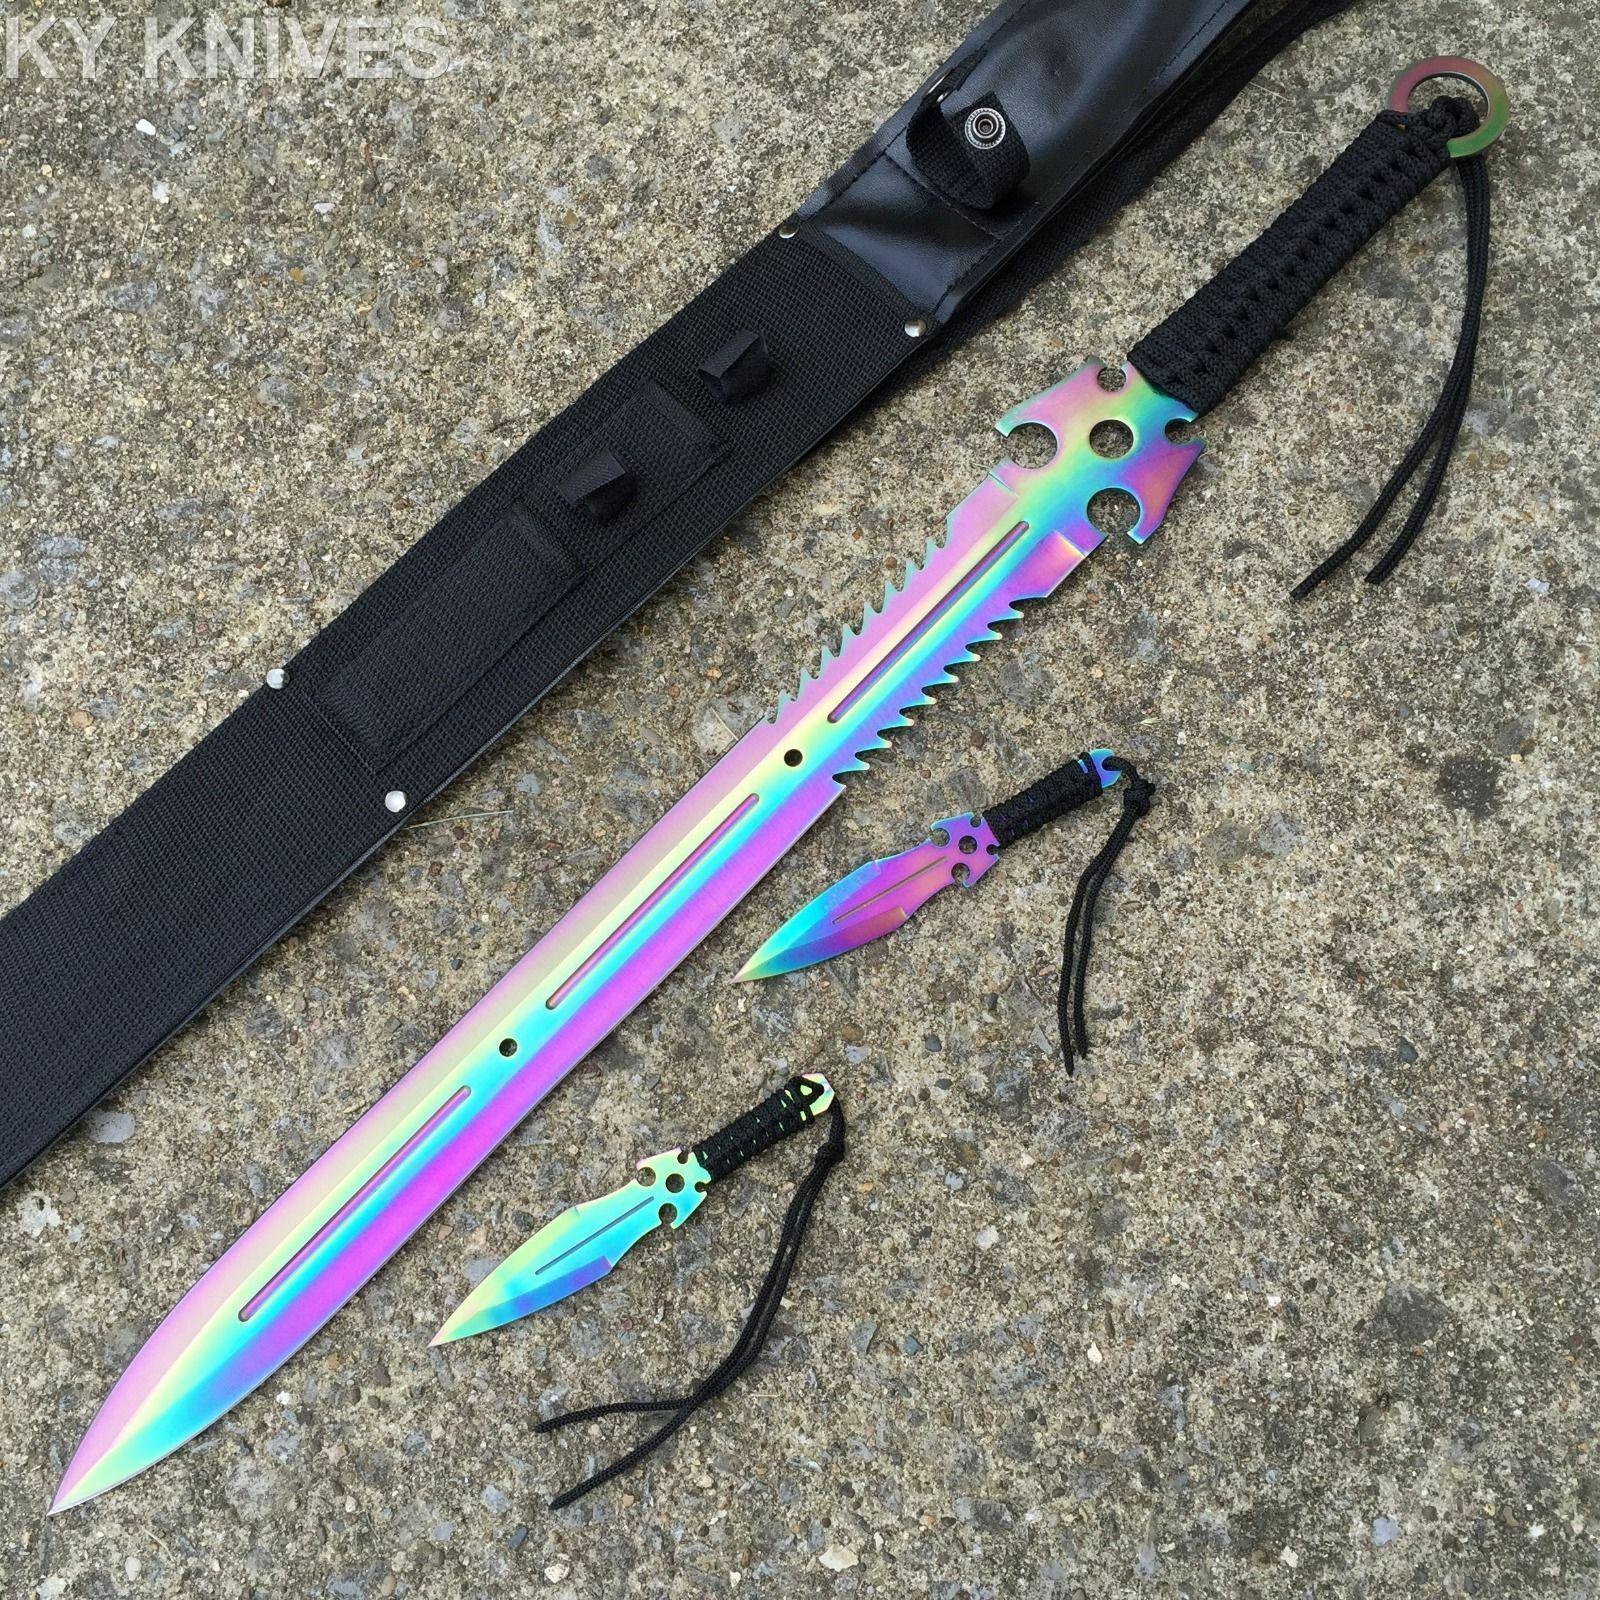 27 Fantasy Master Full Tang Rainbow Ninja Sword With Throwing Knives